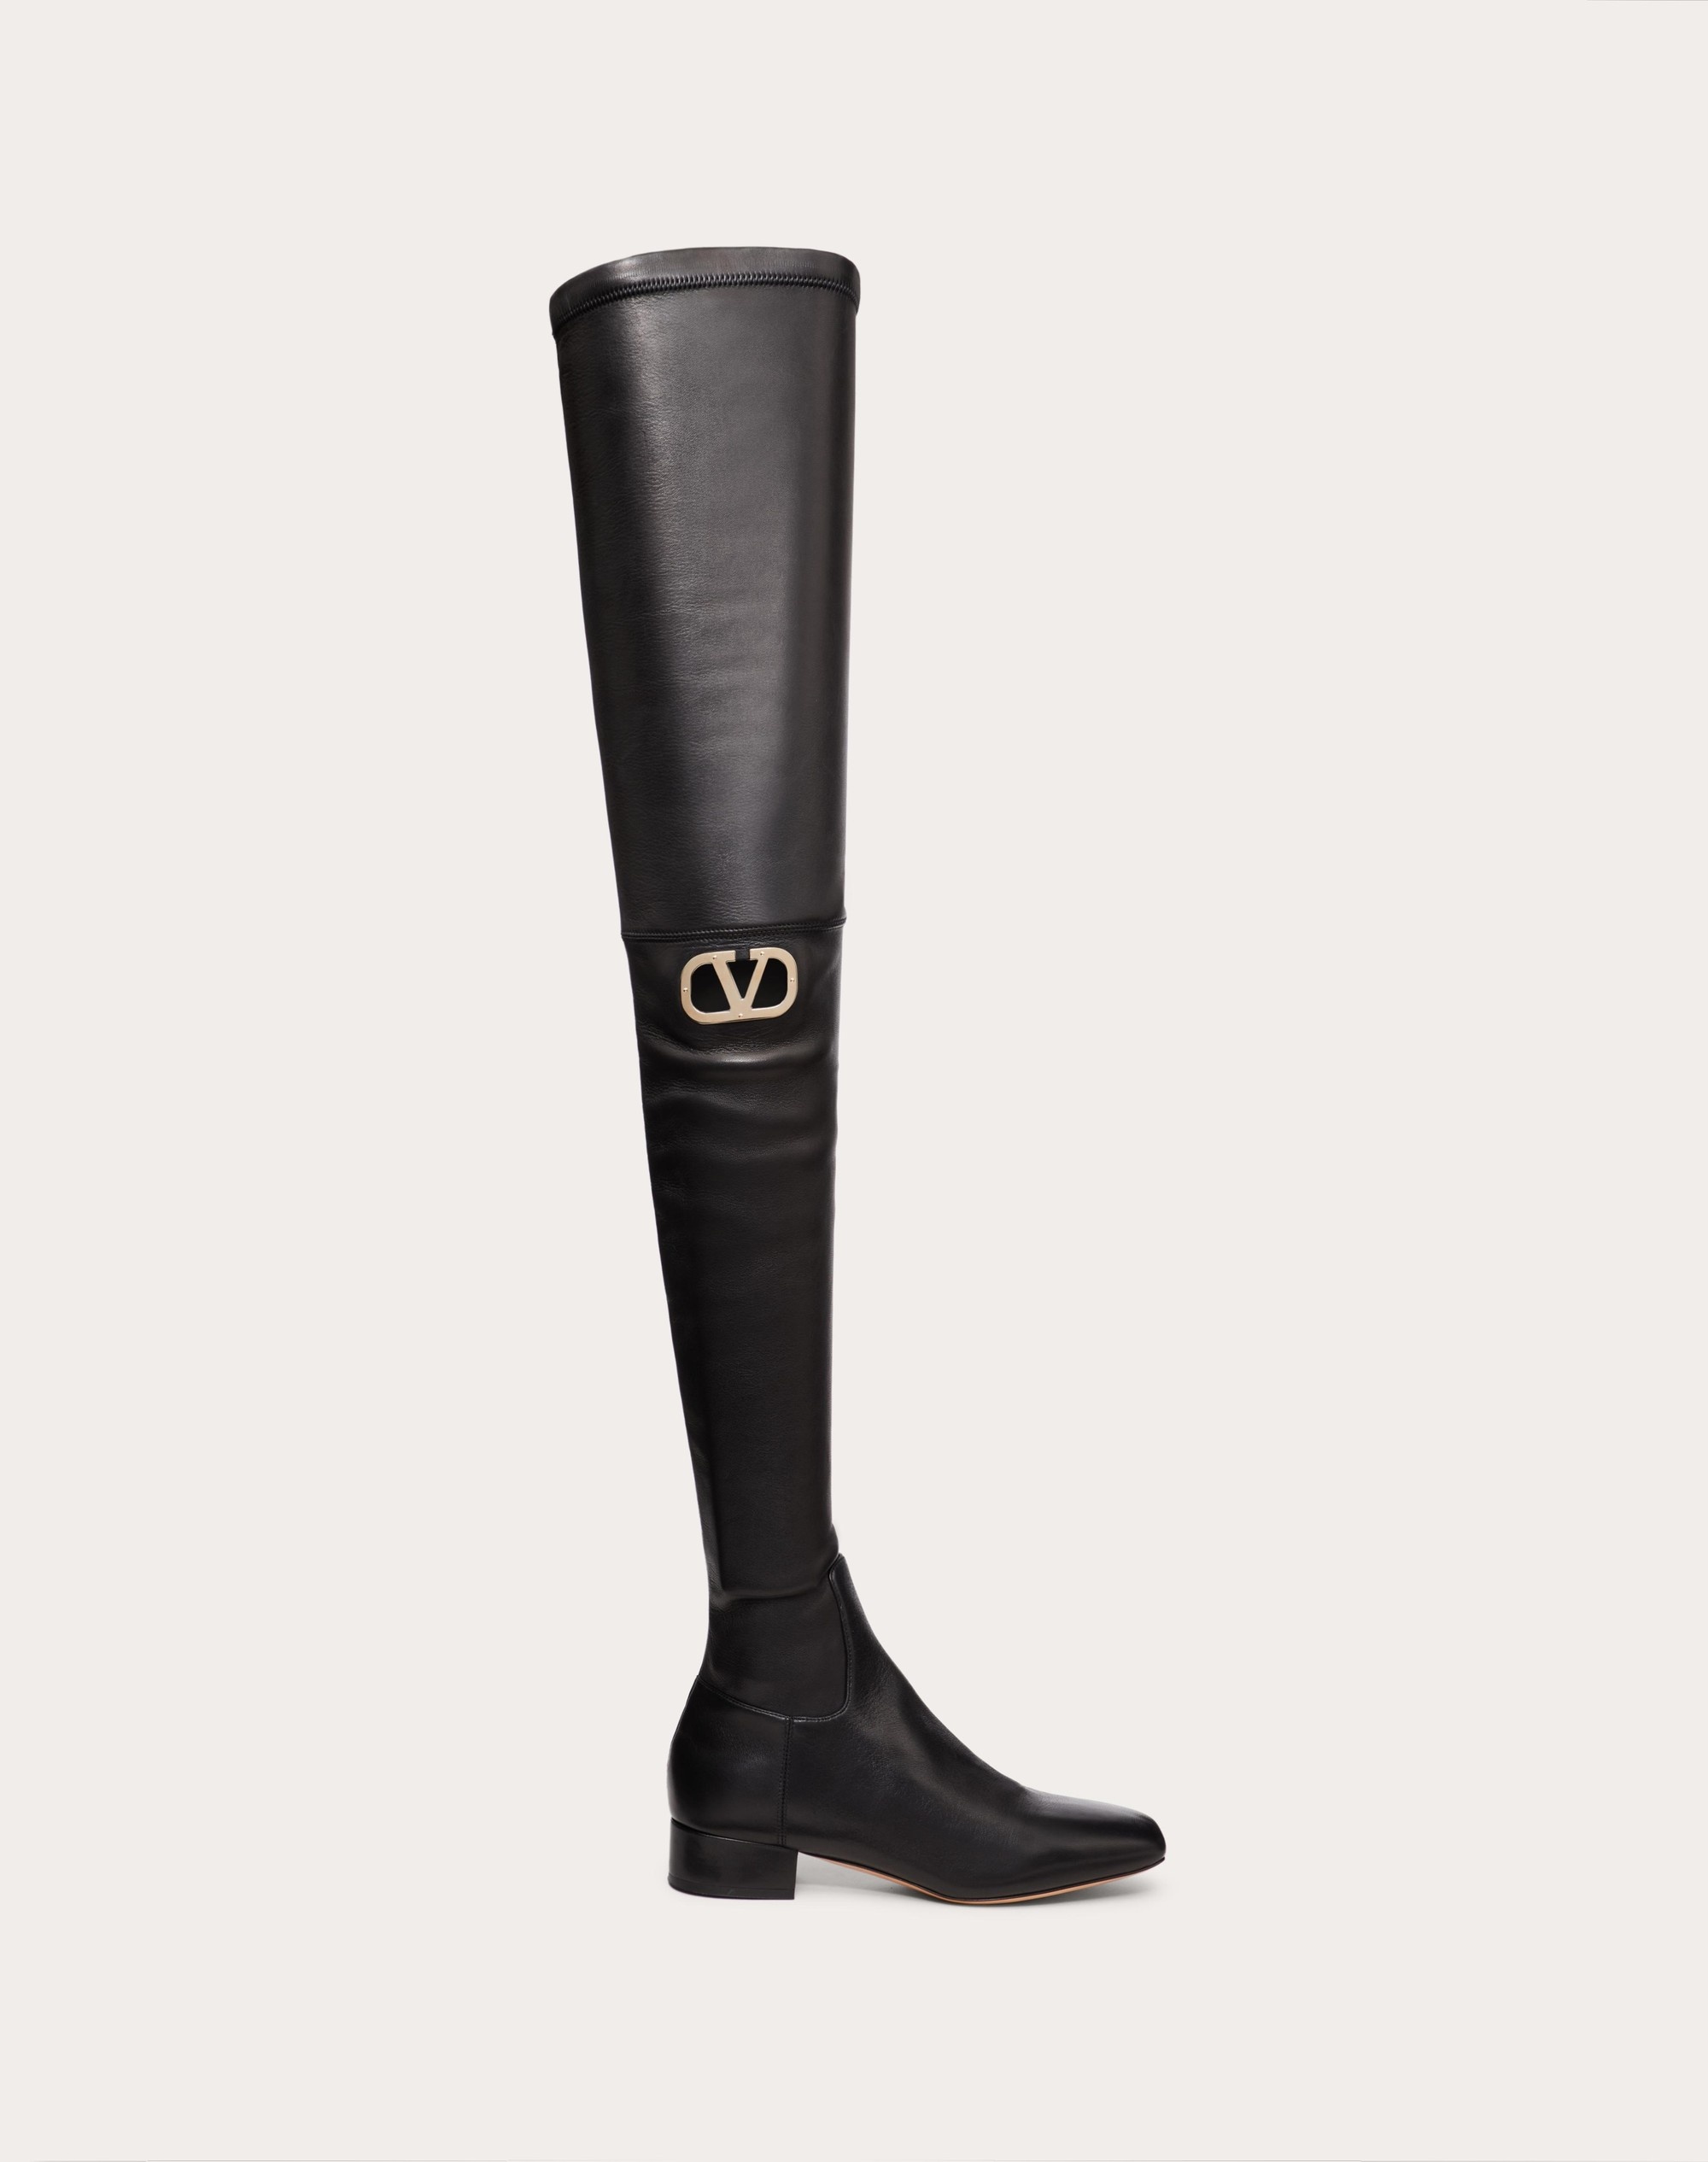 Valentino Garavani Women's Heritage Calfskin Boot 60mm - Black - Knee Boots - 36